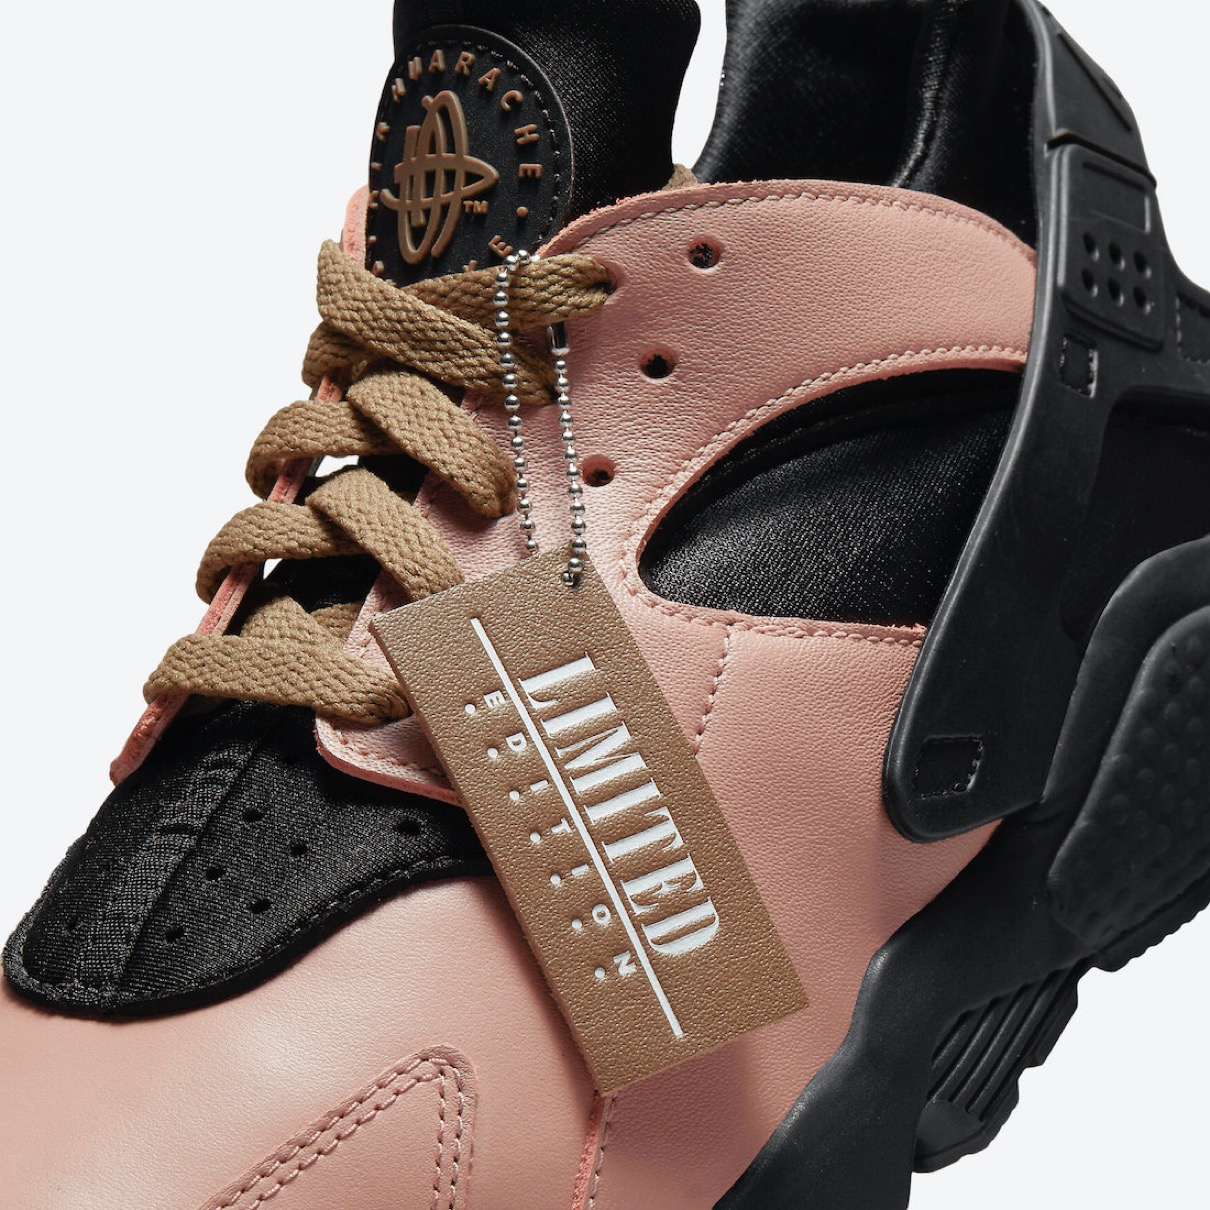 Nike】Air Huarache LE “Toadstool”が国内9月10日に復刻発売予定 | UP 